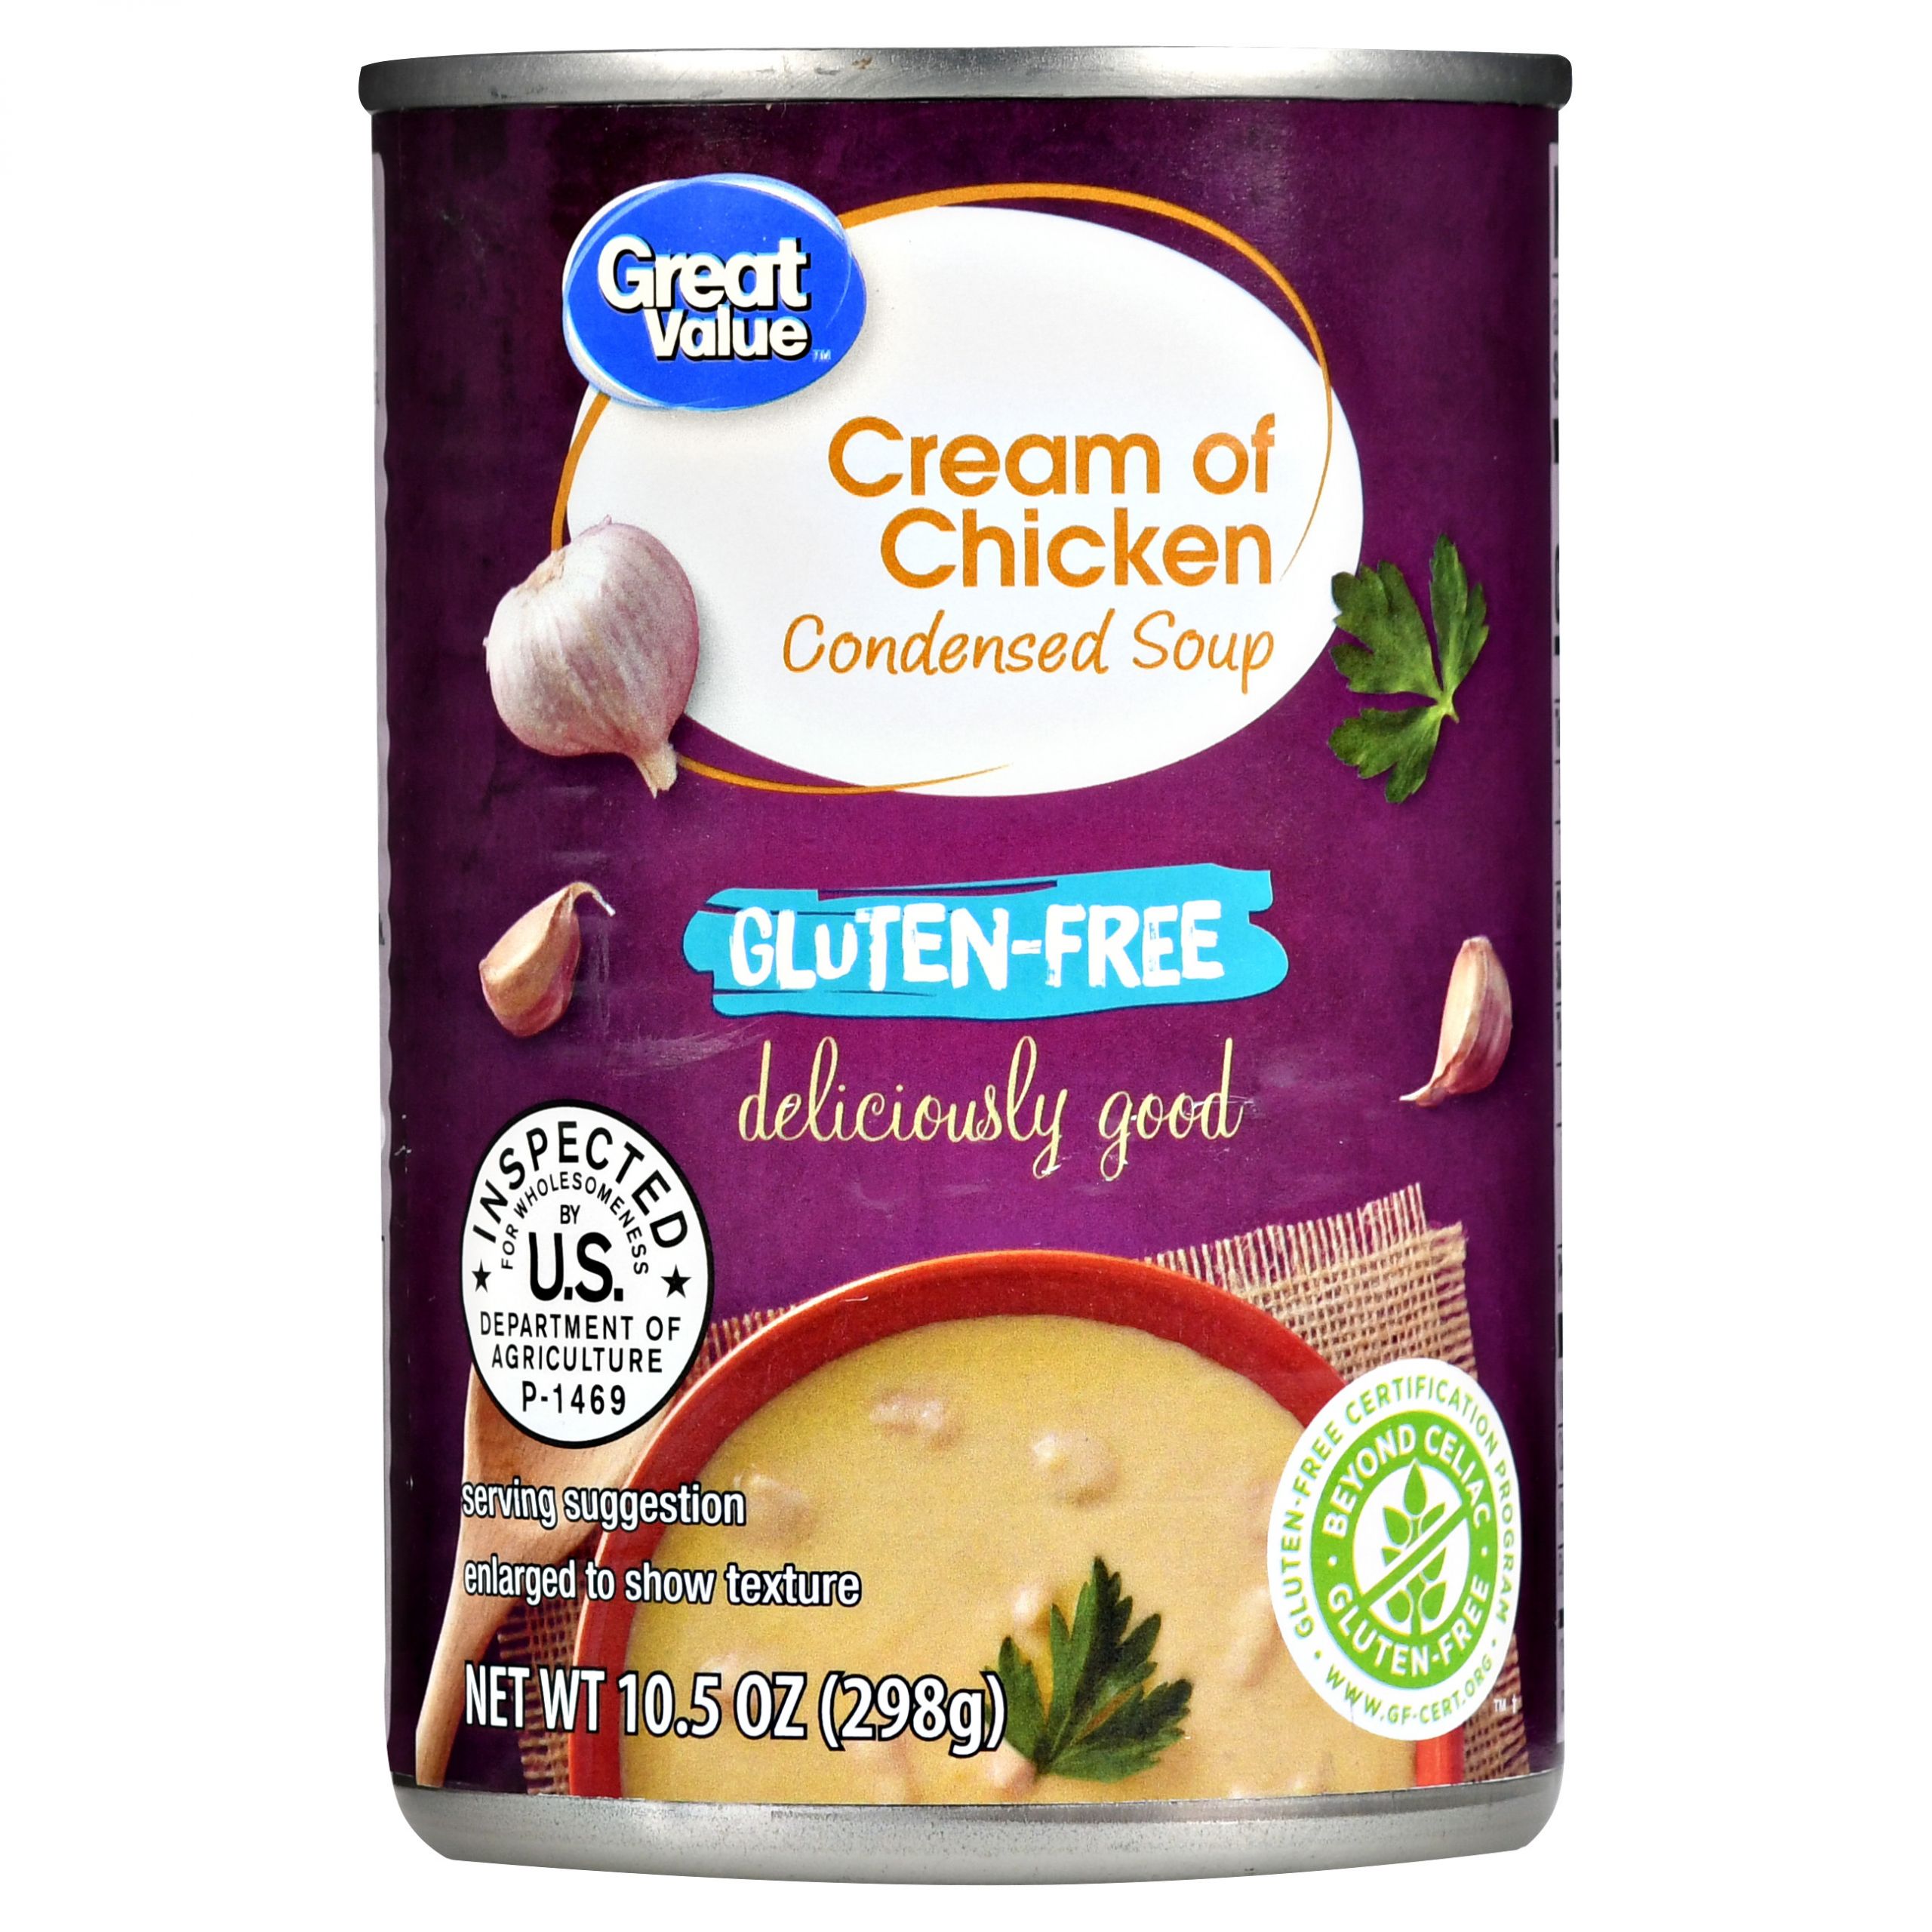 Gluten Free Cream Of Chicken Soup
 Great Value Gluten Free Cream of Chicken Condensed Soup